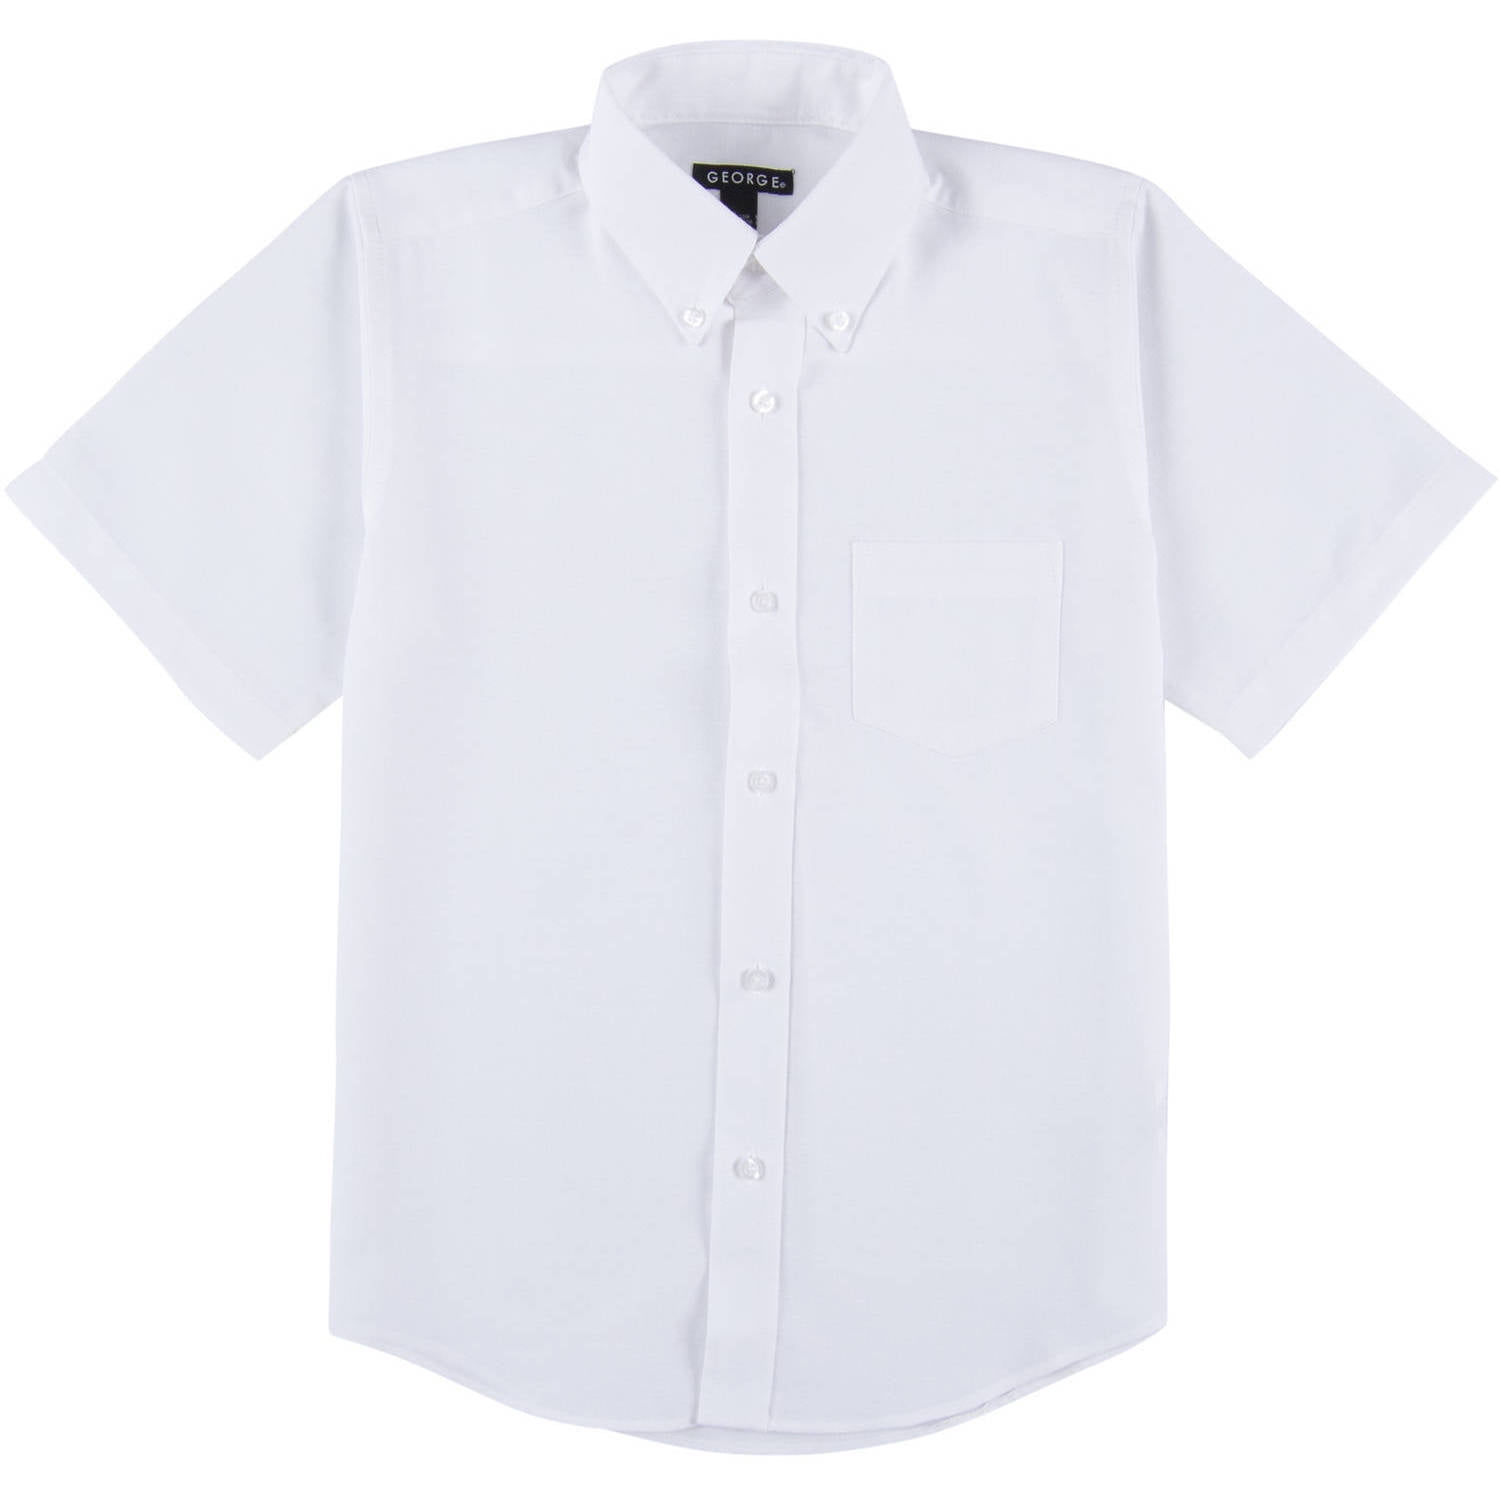 George Husky Boys School Uniform Long Sleeve Button-Up Oxford Shirt ...